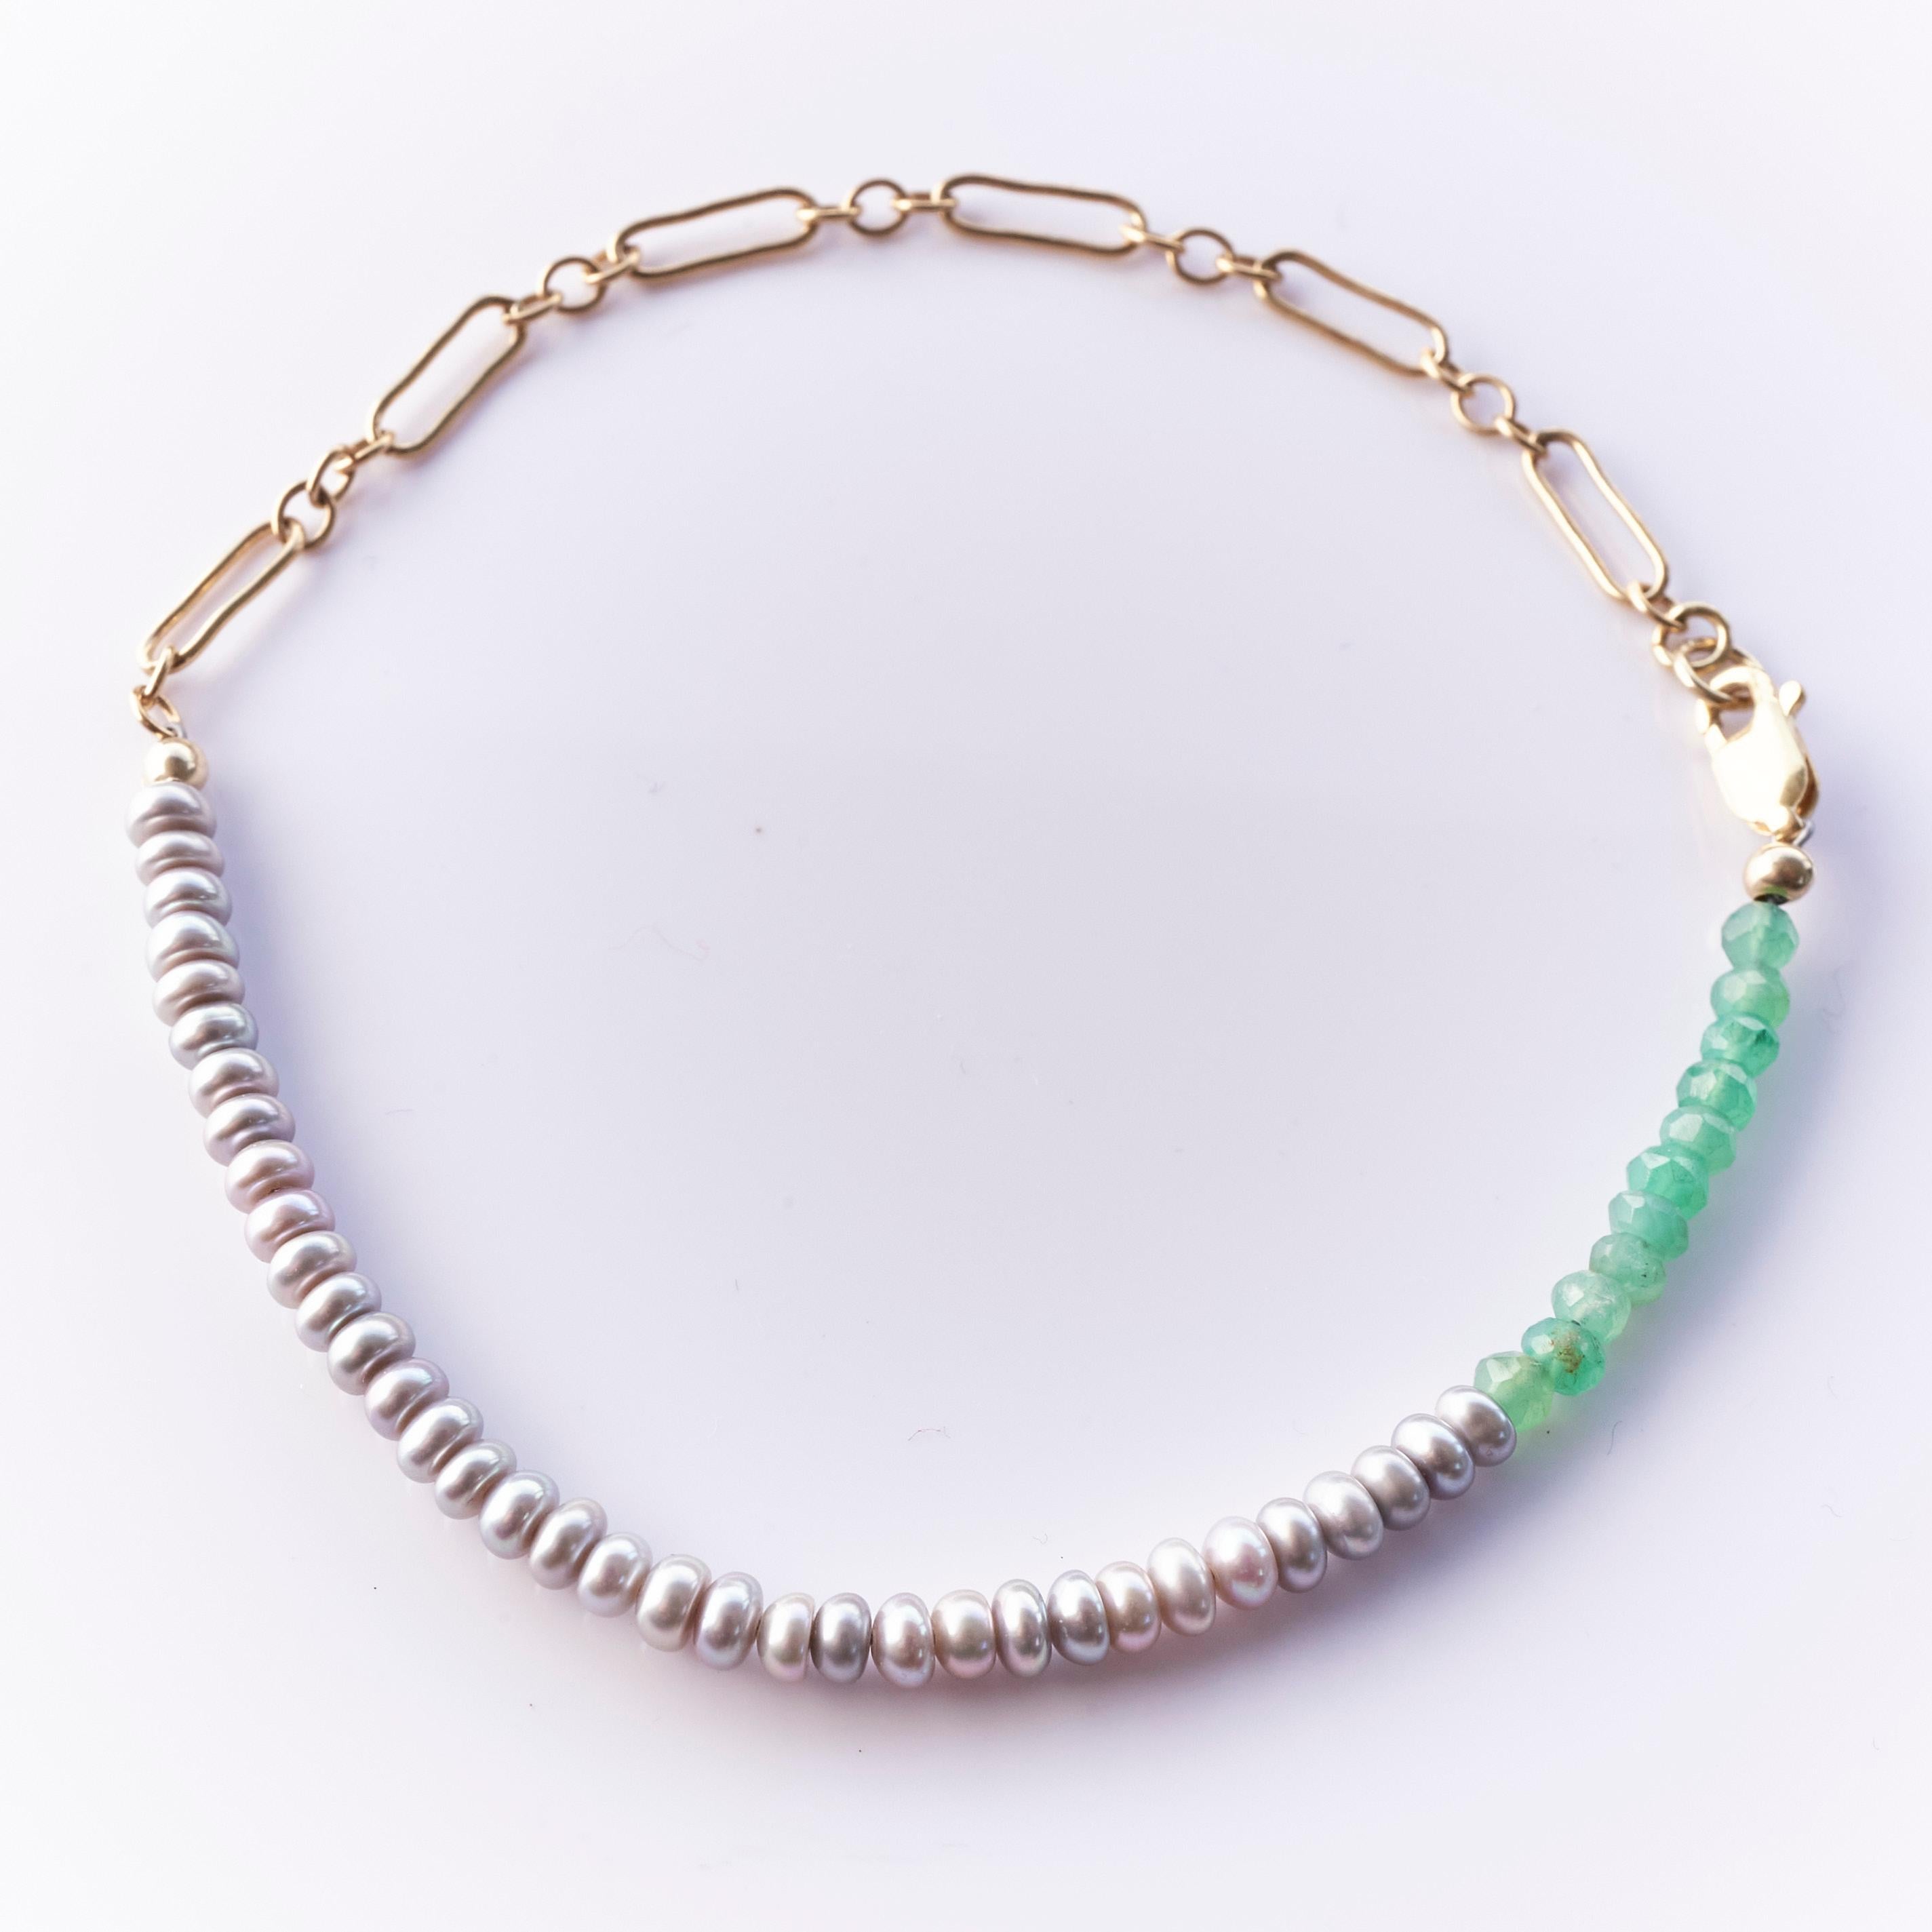 Pearl Chrysoprase  Bead Bracelet Gold Filled Chain J Dauphin

